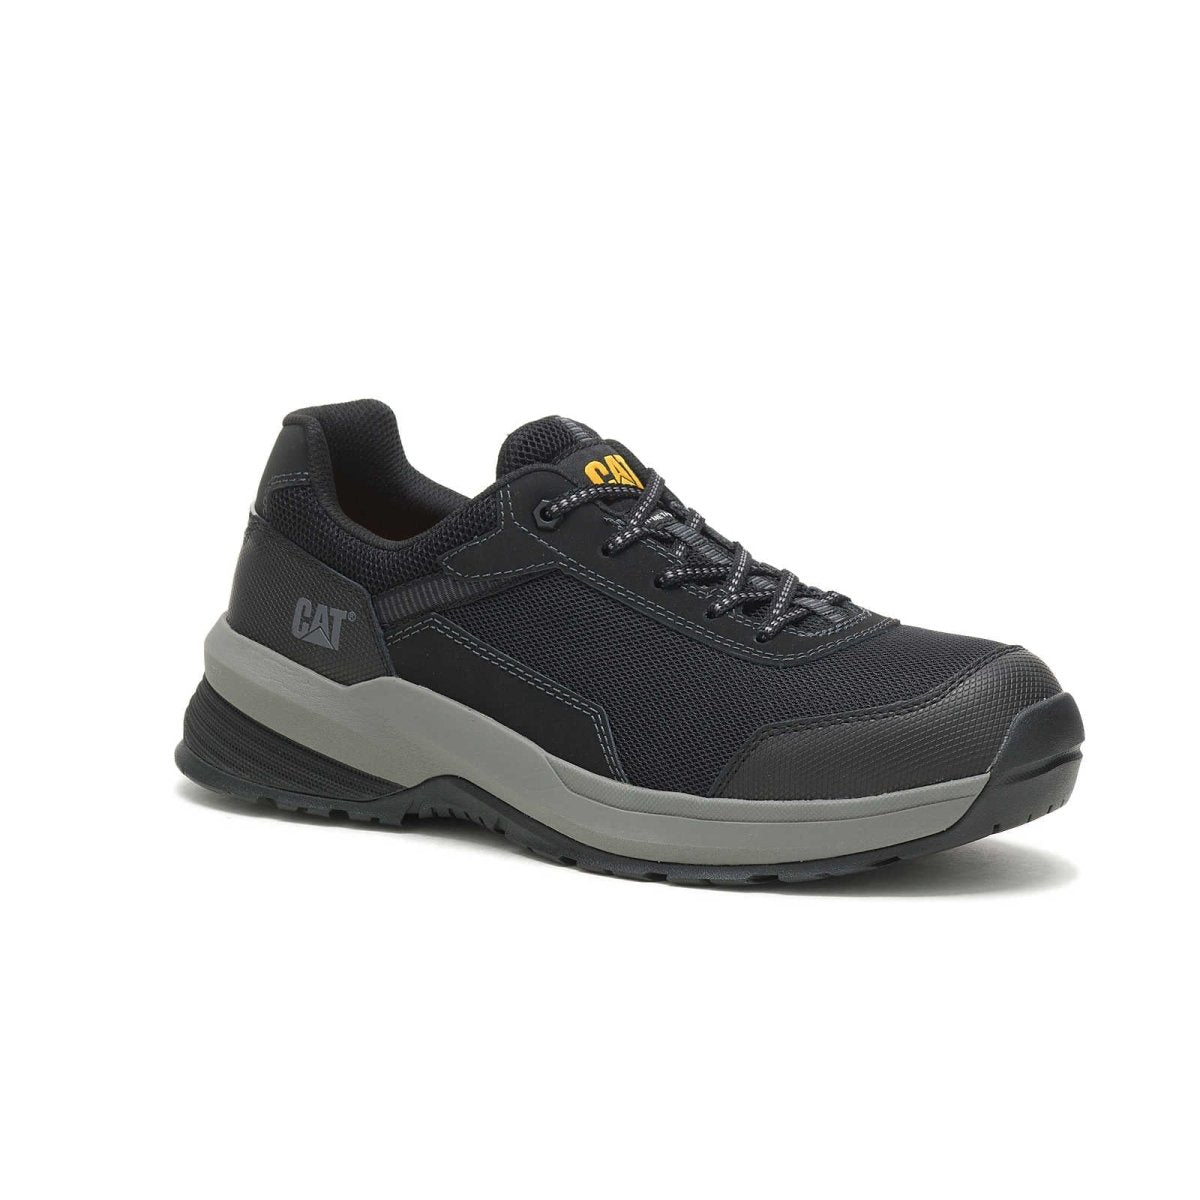 CATERPILLAR STREAMLINE 2.0 MESH COMPOSITE TOE MEN'S WORK SHOE (P91352) IN BLACK - TLW Shoes